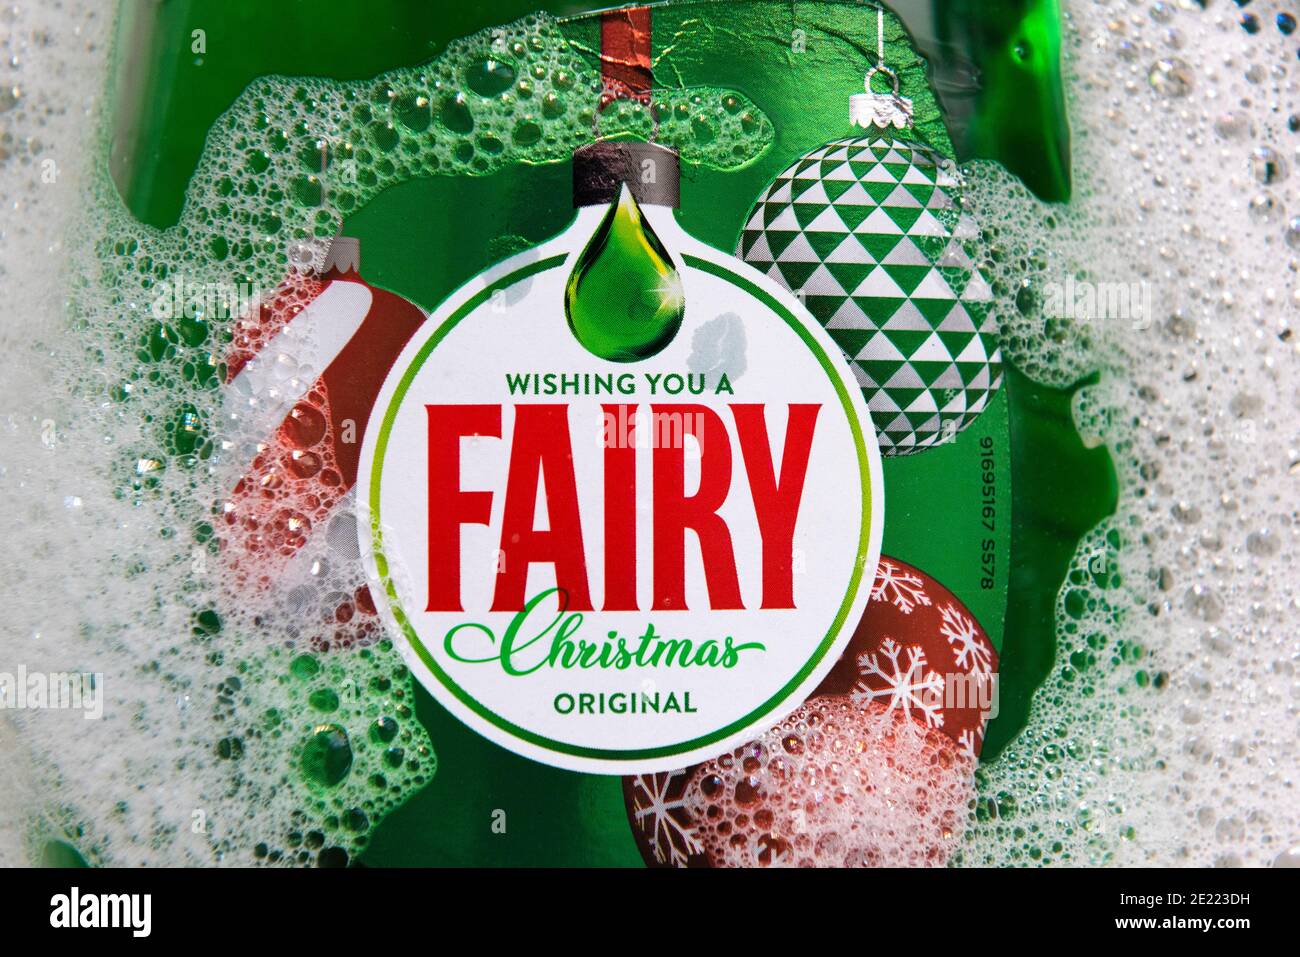 Christmas festive message on a fairy liquid washing up liquid bottle label UK Stock Photo